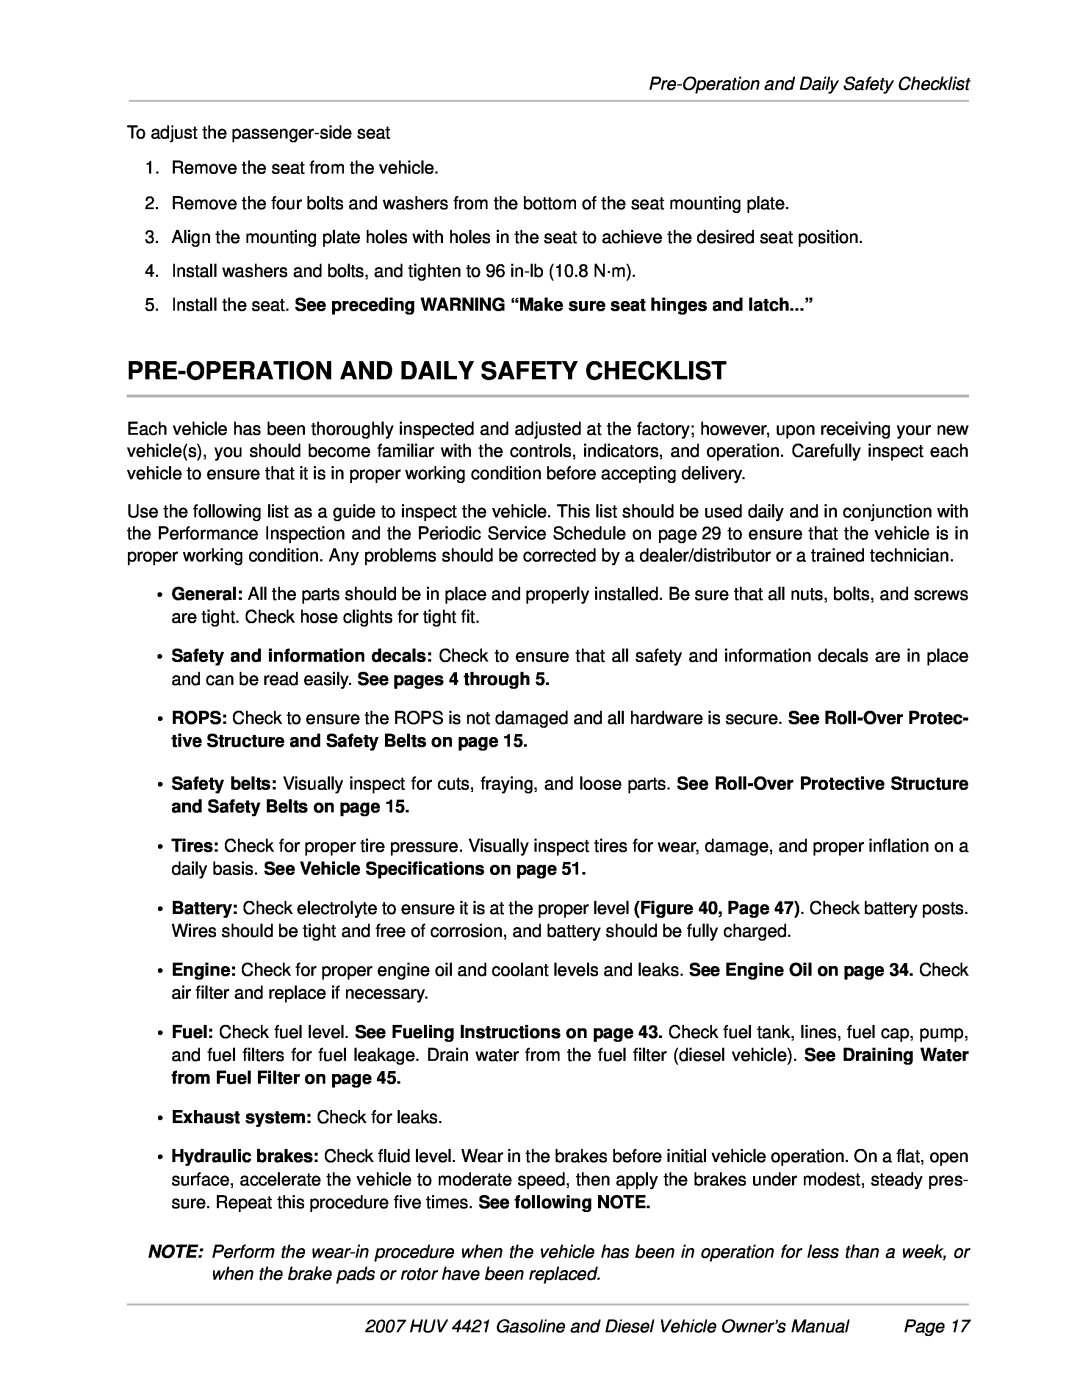 Husqvarna HUV 4421-D / DXP Pre-Operation And Daily Safety Checklist, Pre-Operation and Daily Safety Checklist, Page 